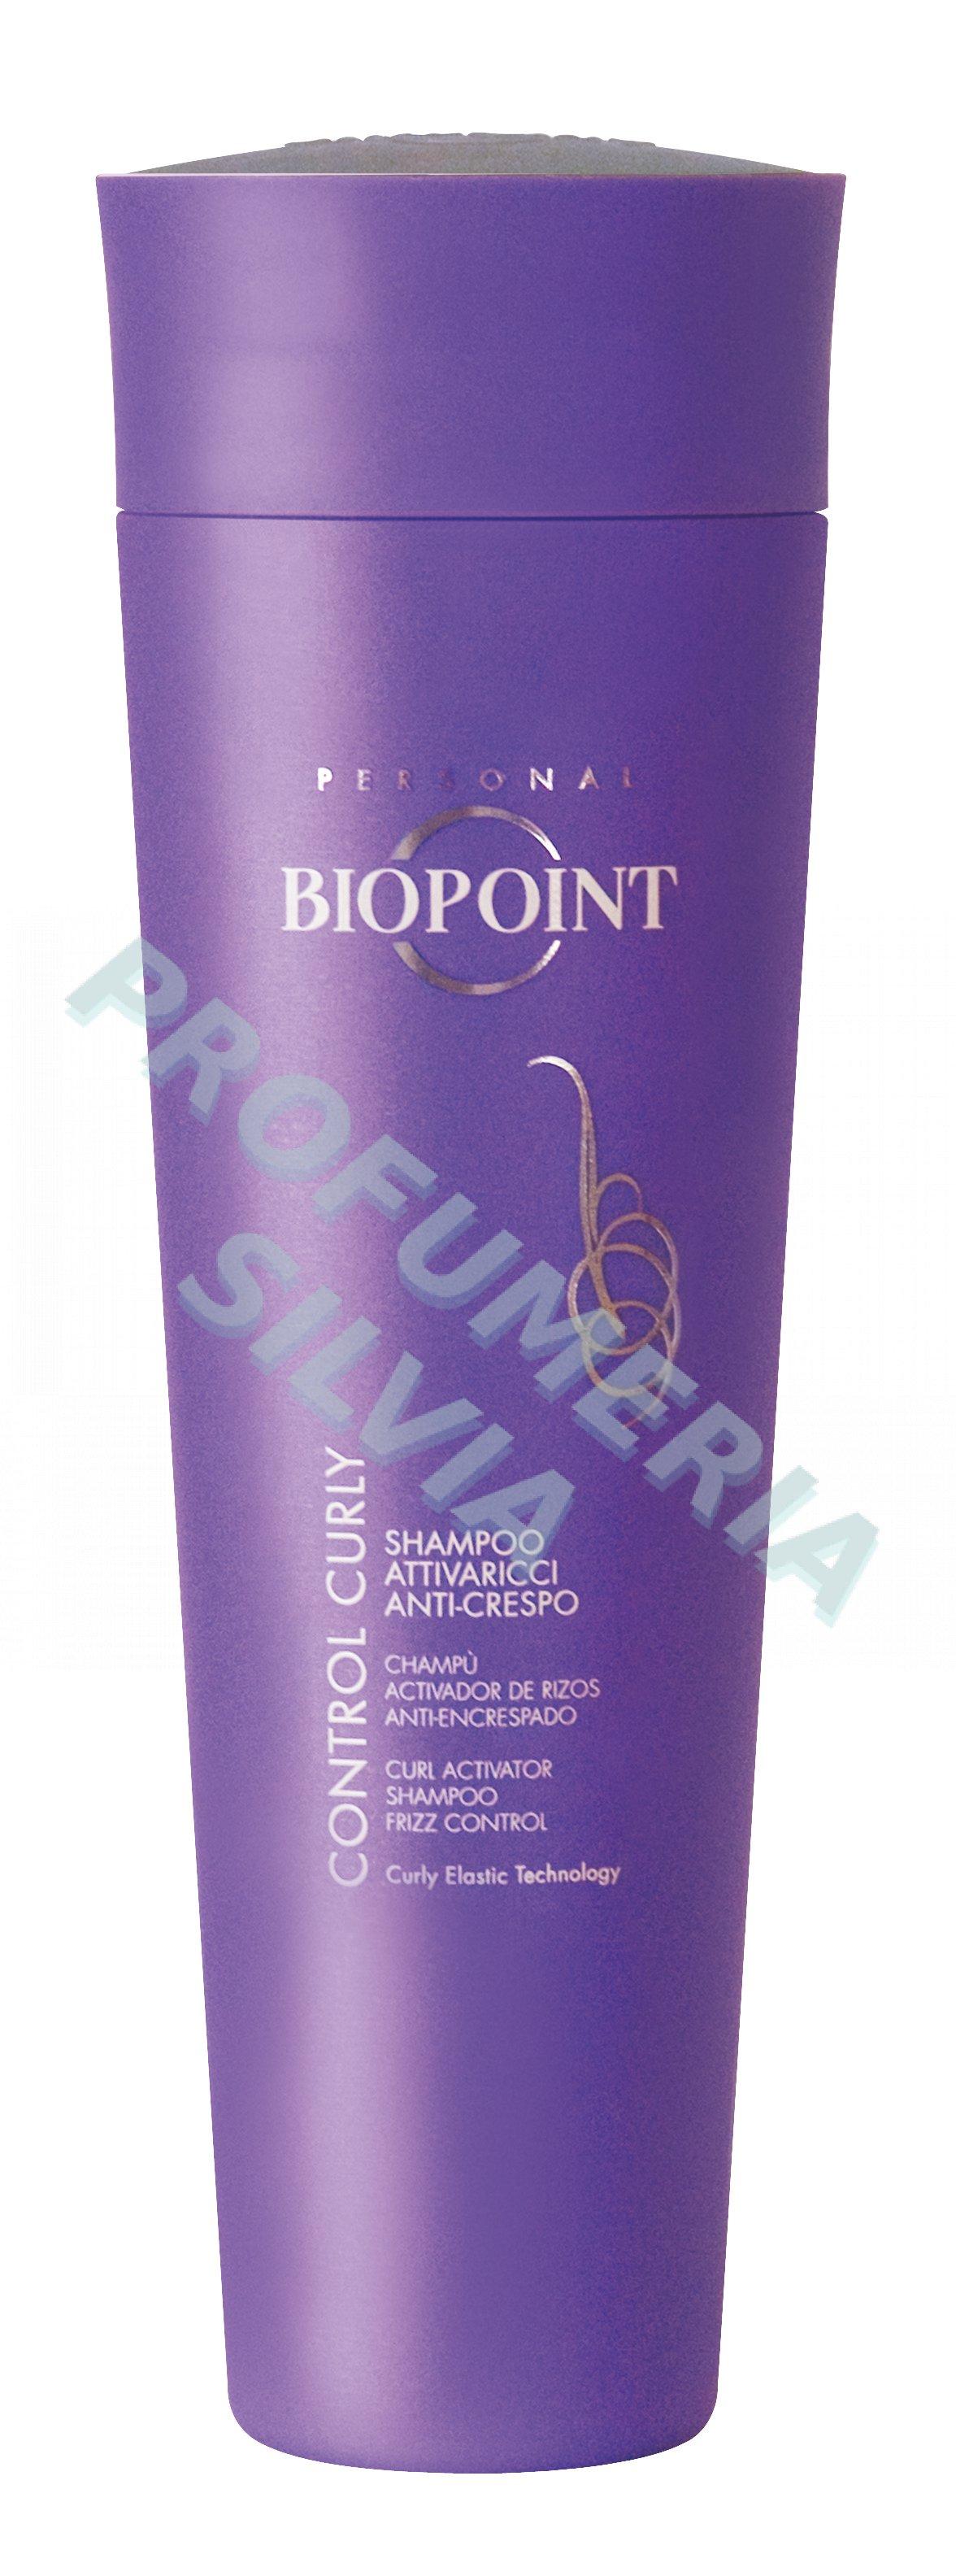 Foto control de attivaricci curly shampoo 200ml Biopoint